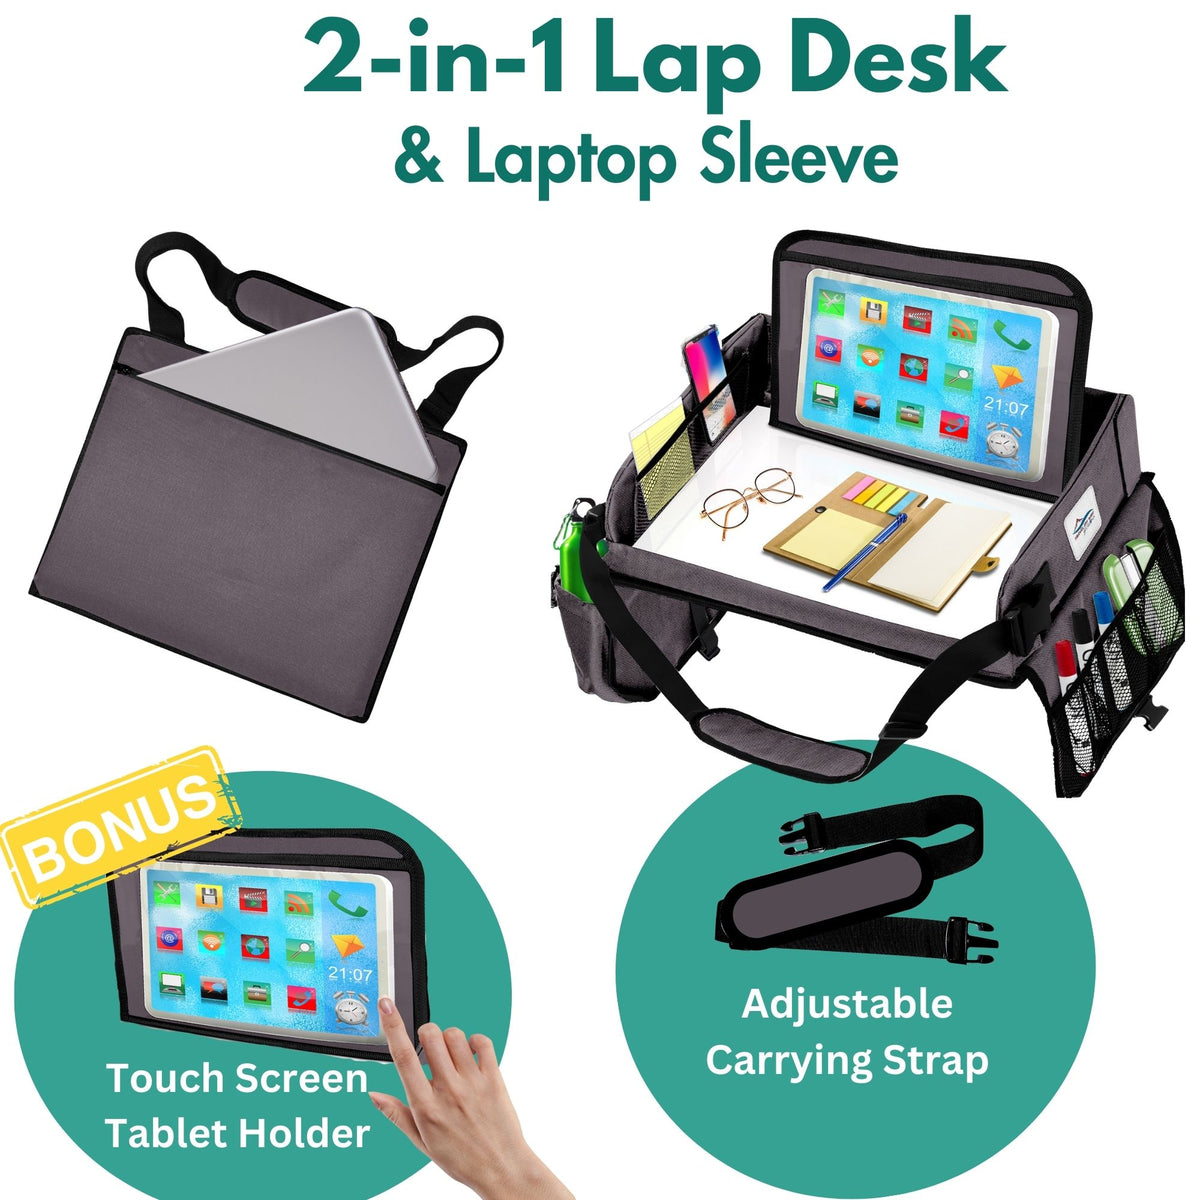 Lap desk storage, Lap desk for laptop, Car seat tray